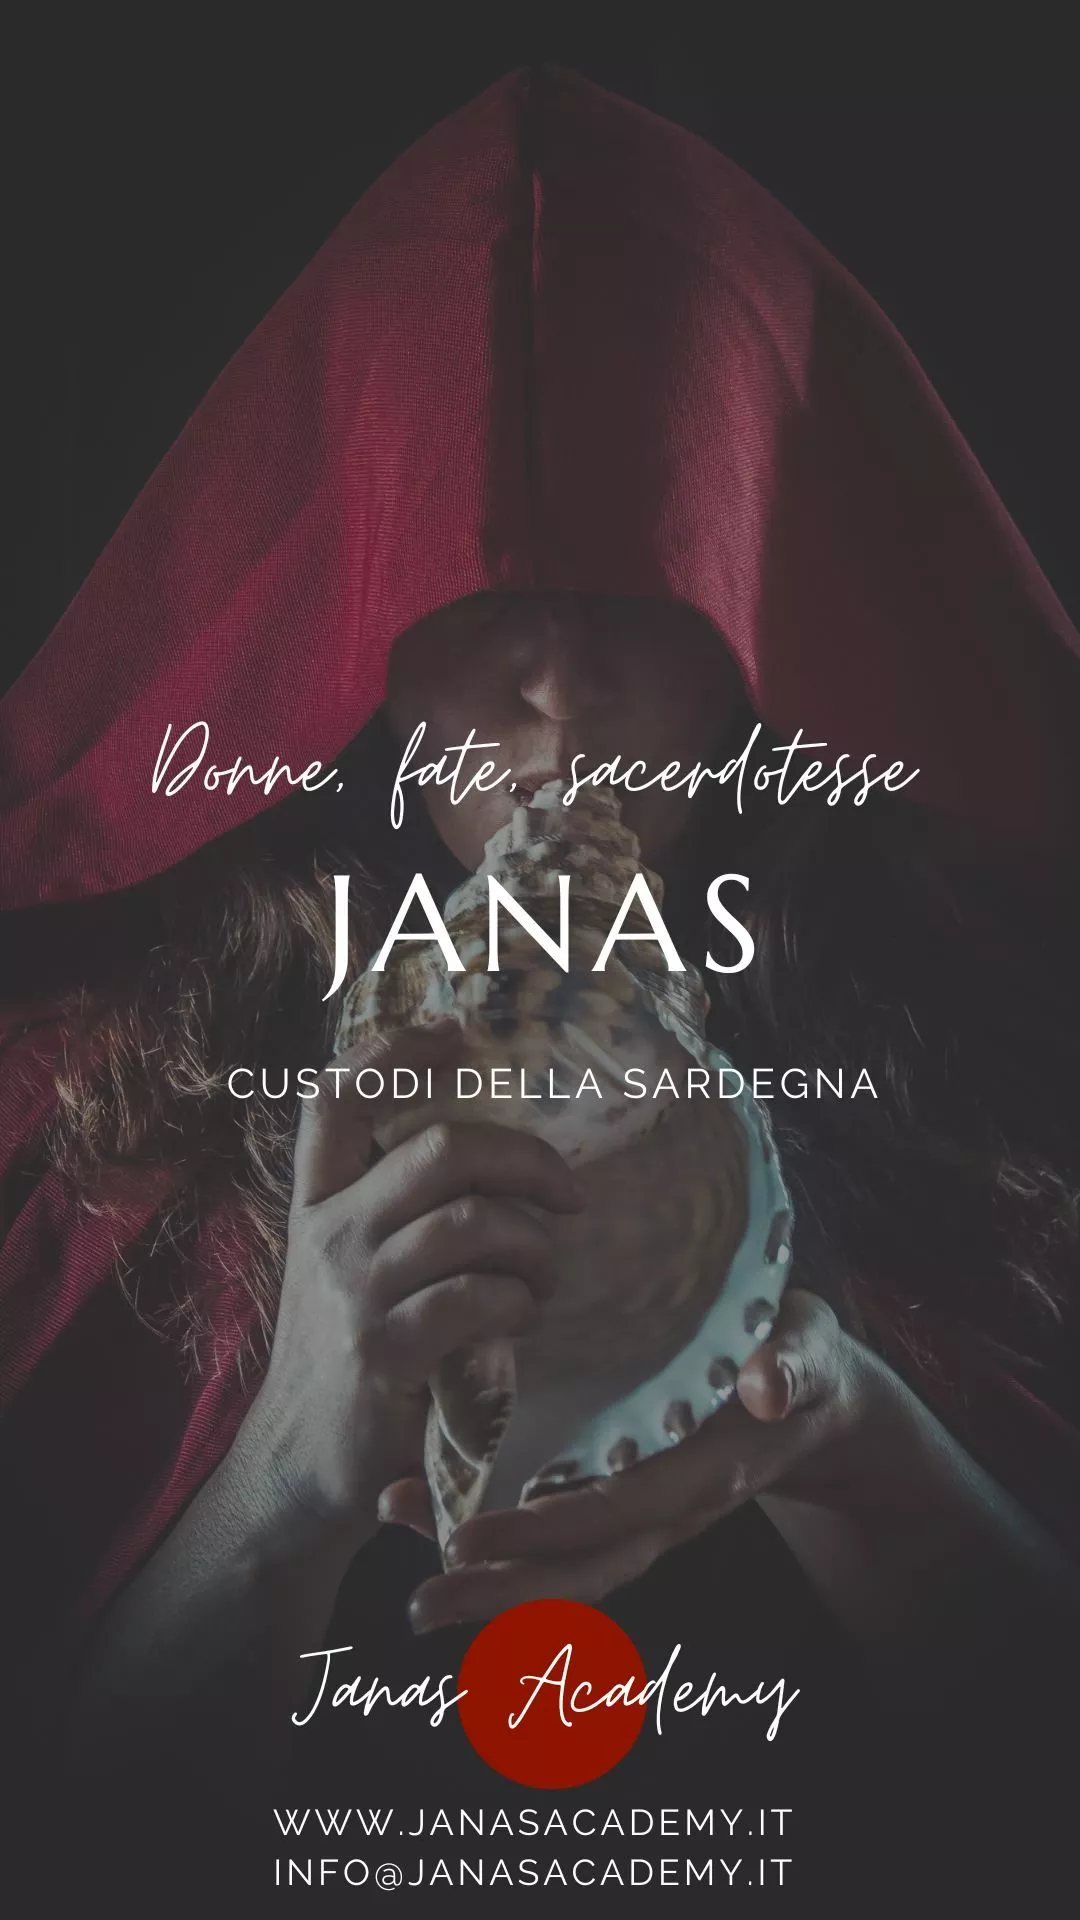 donne fate sacerdotesse janas custodi della sardegna online seminario corso Janas-Academy – claudia zedda sardegna